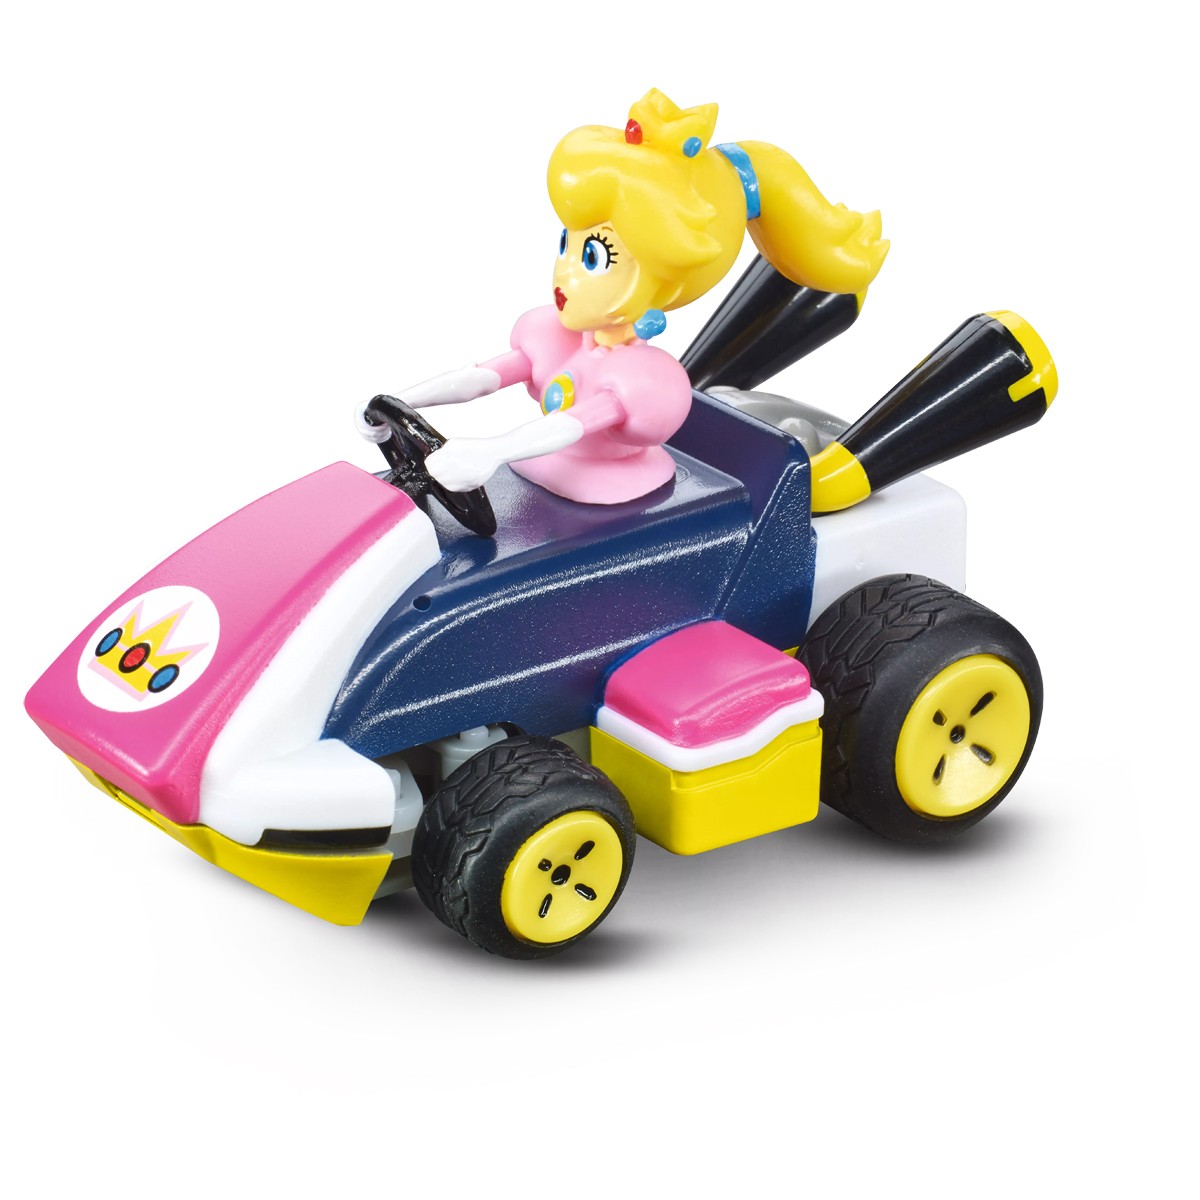 Carrera RC Mario Kart - Circuit Special Mario | Toy & Gift | FREE SHIPPING